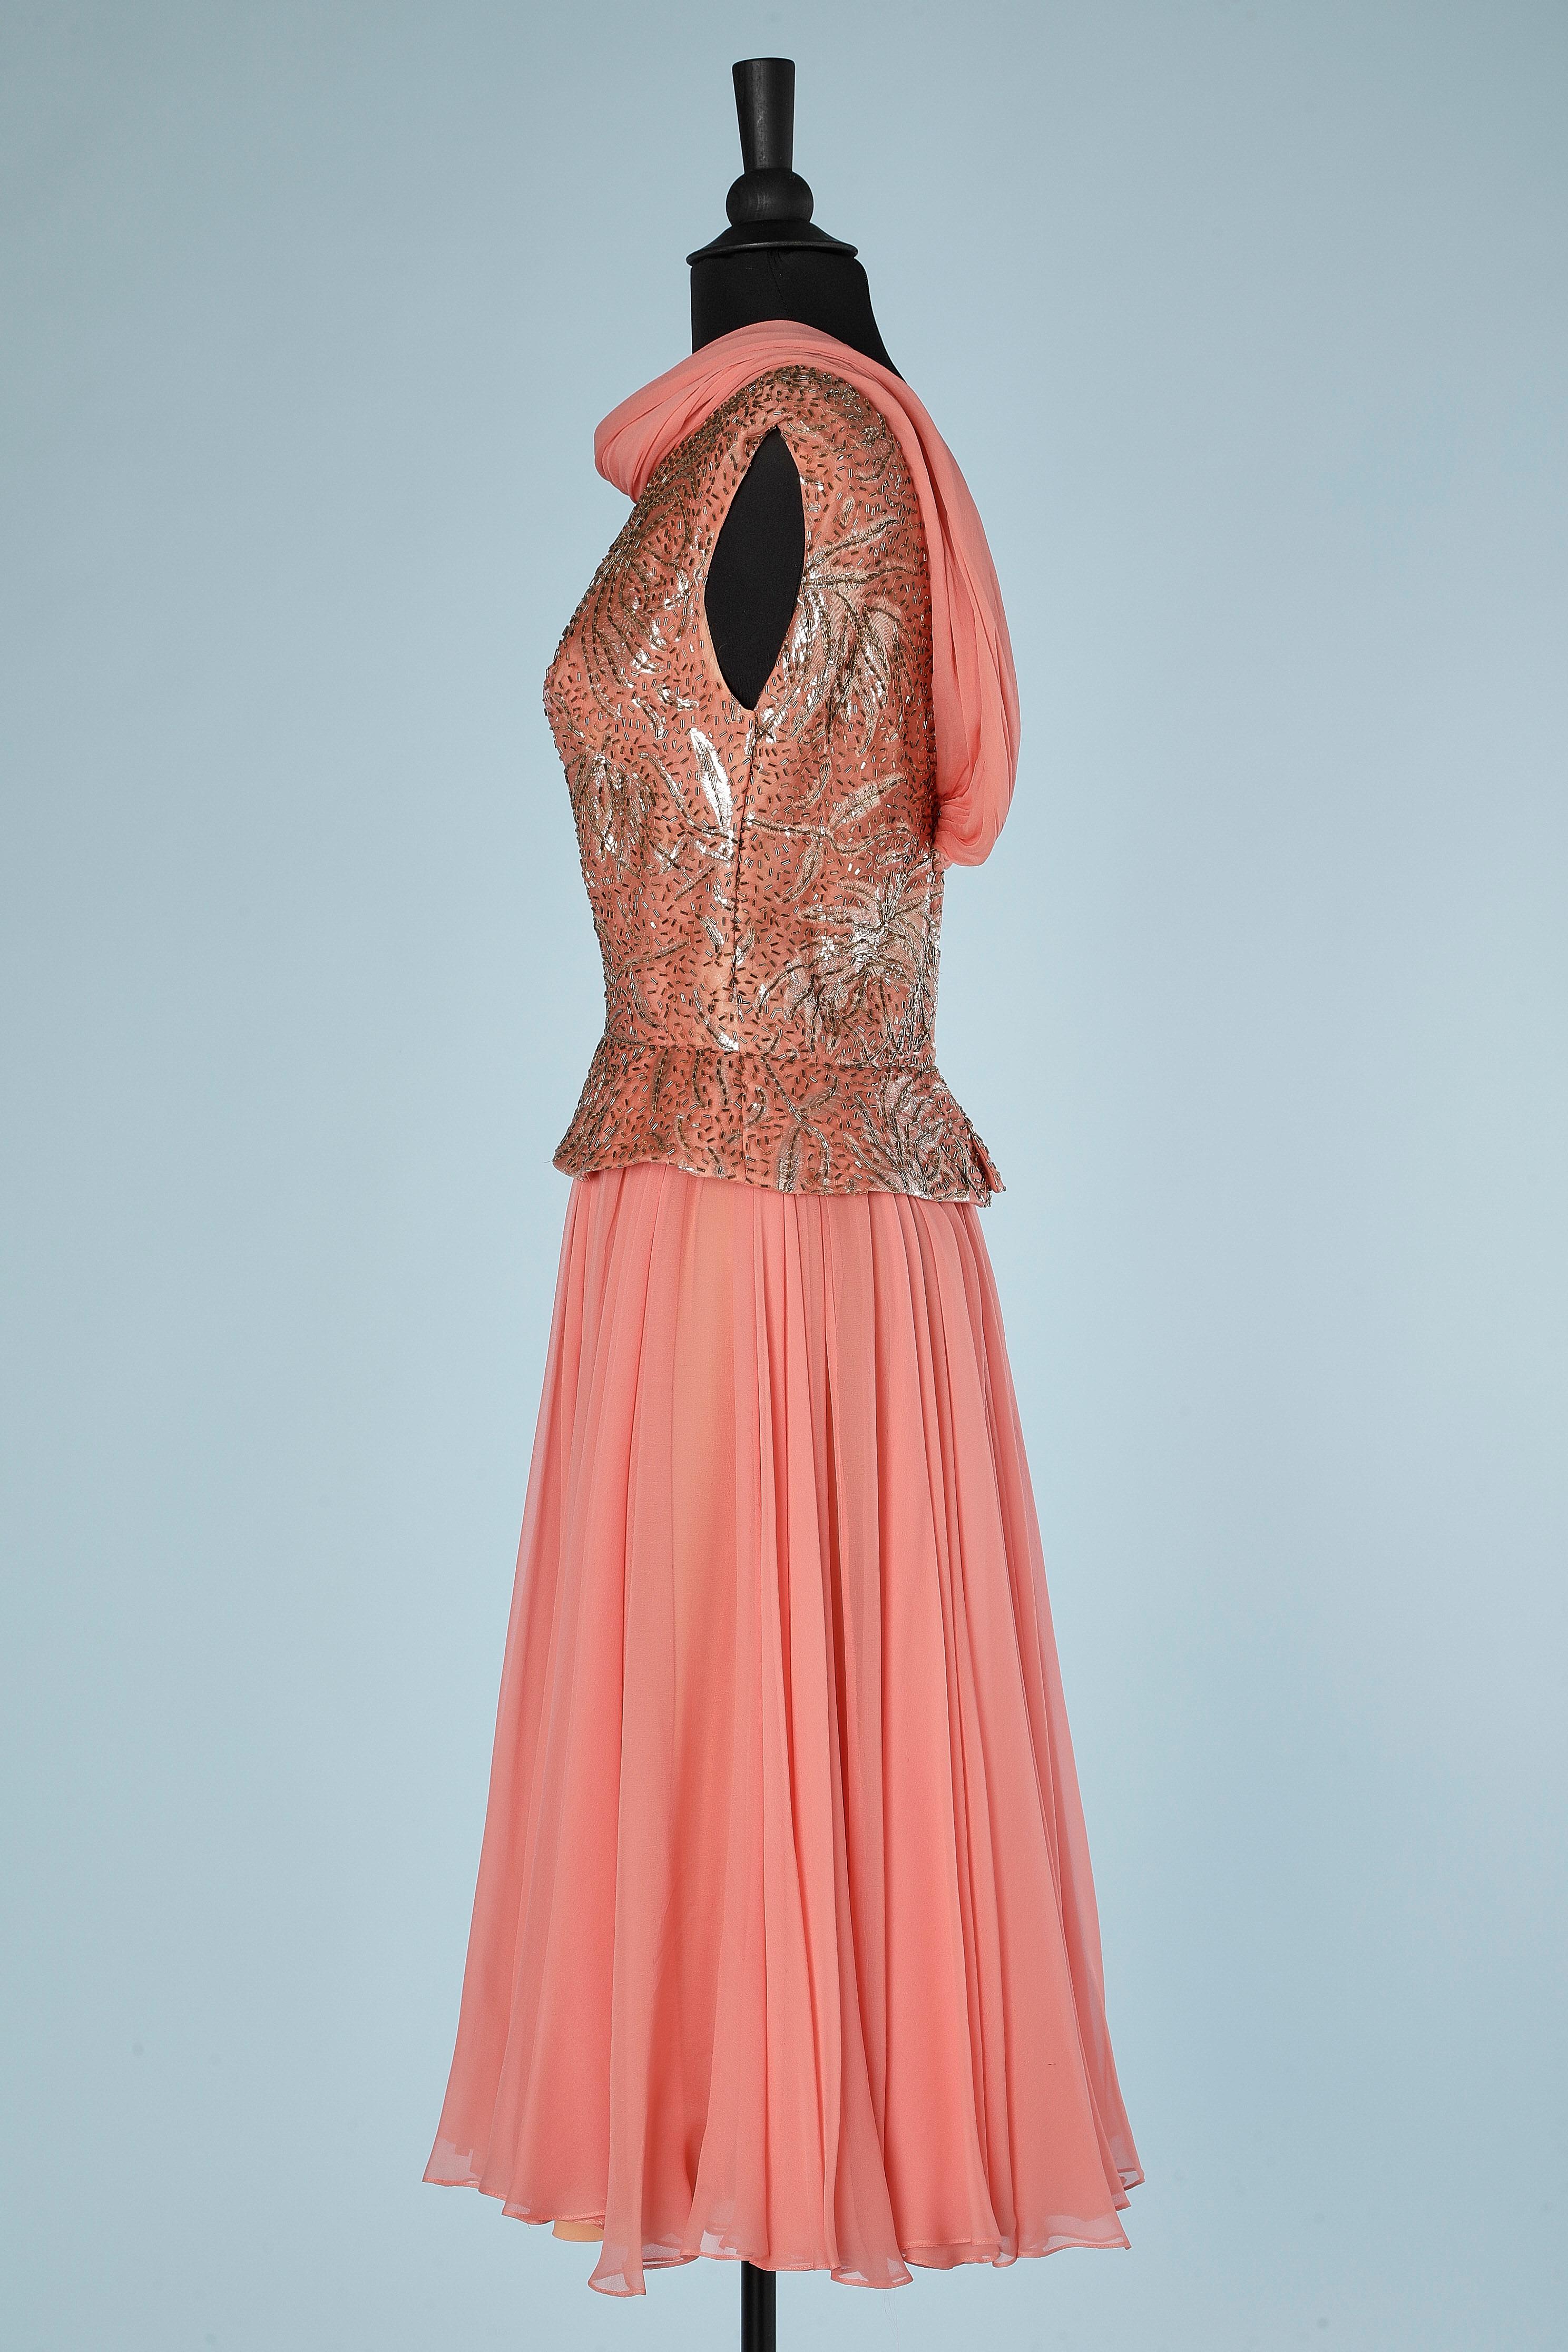 Women's Salmon pink chiffon dress and beaded lurex Pat Sandler for Hightlight For Sale